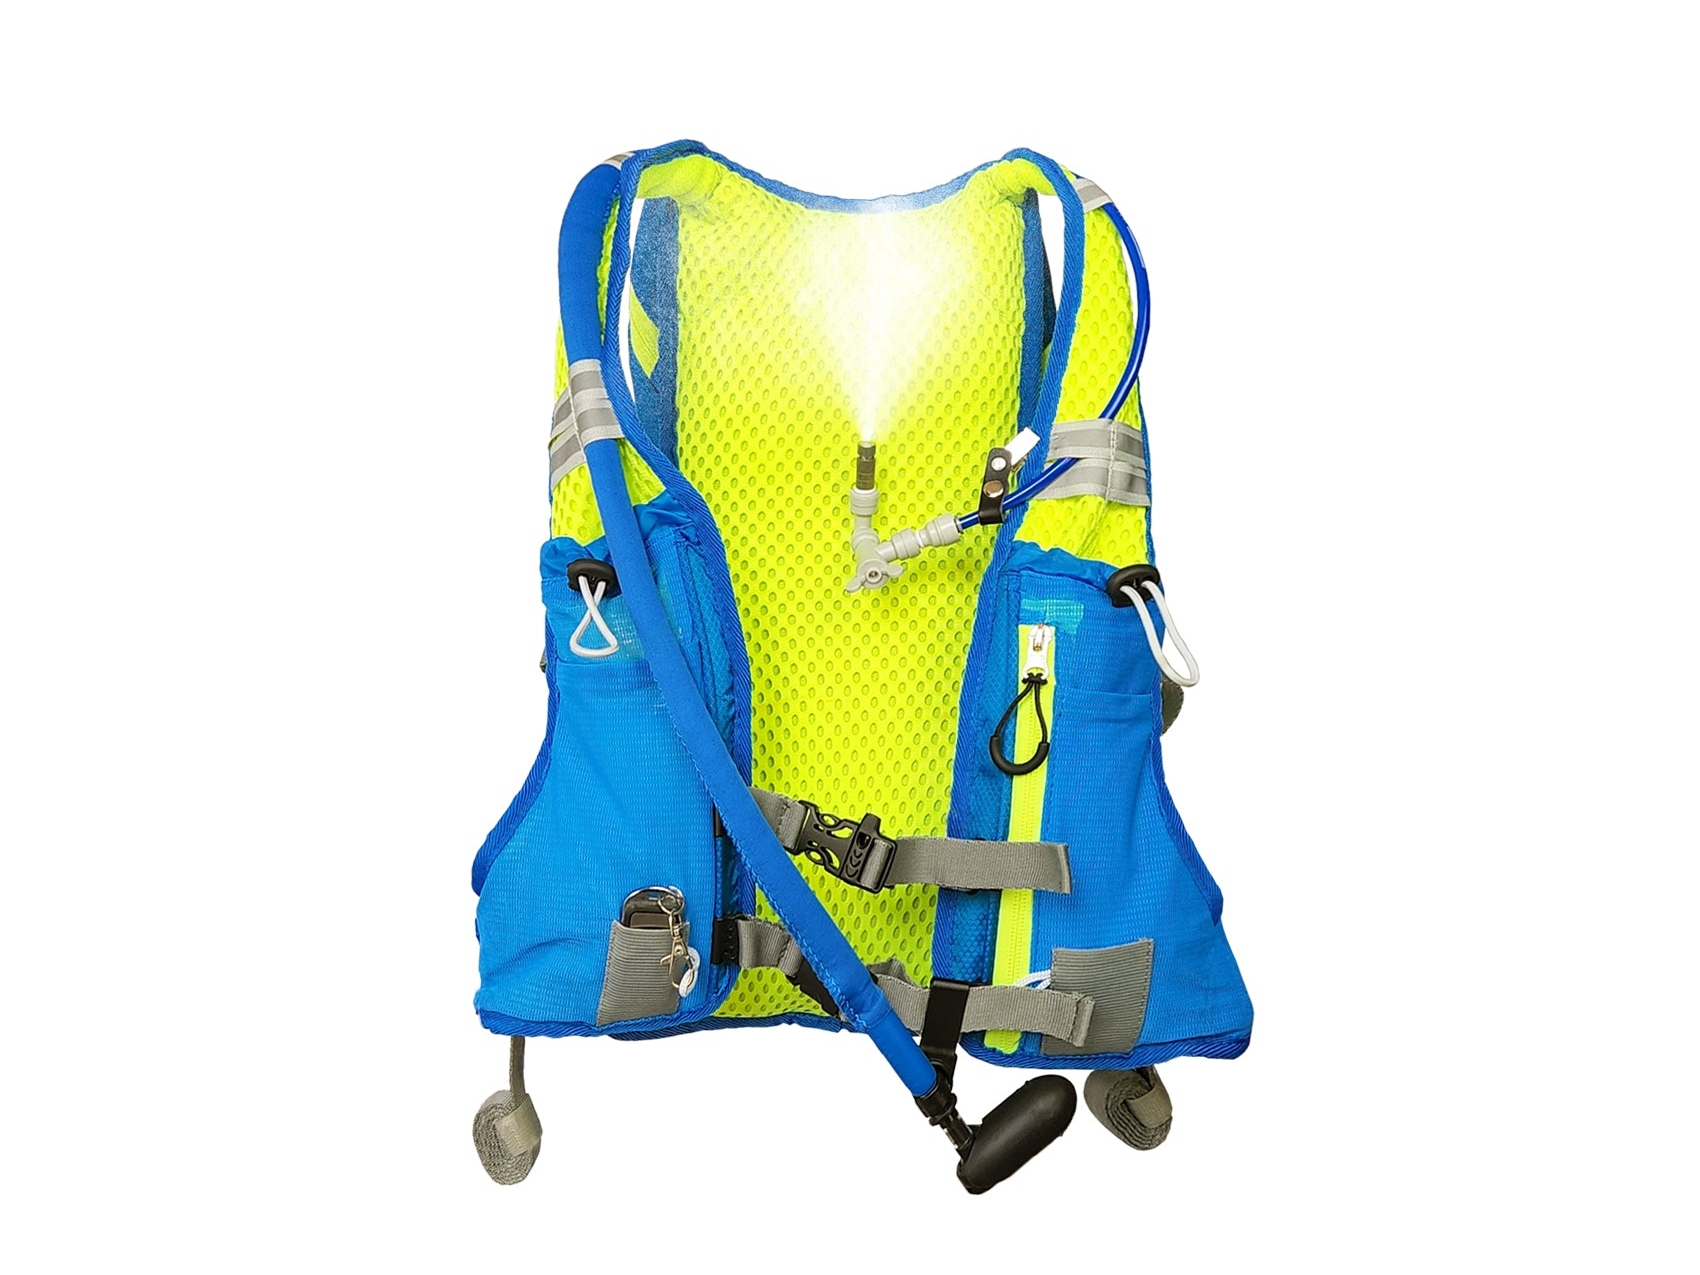 ExtremeMist Misting & Drinking Hydration Backpack, Blue, Large